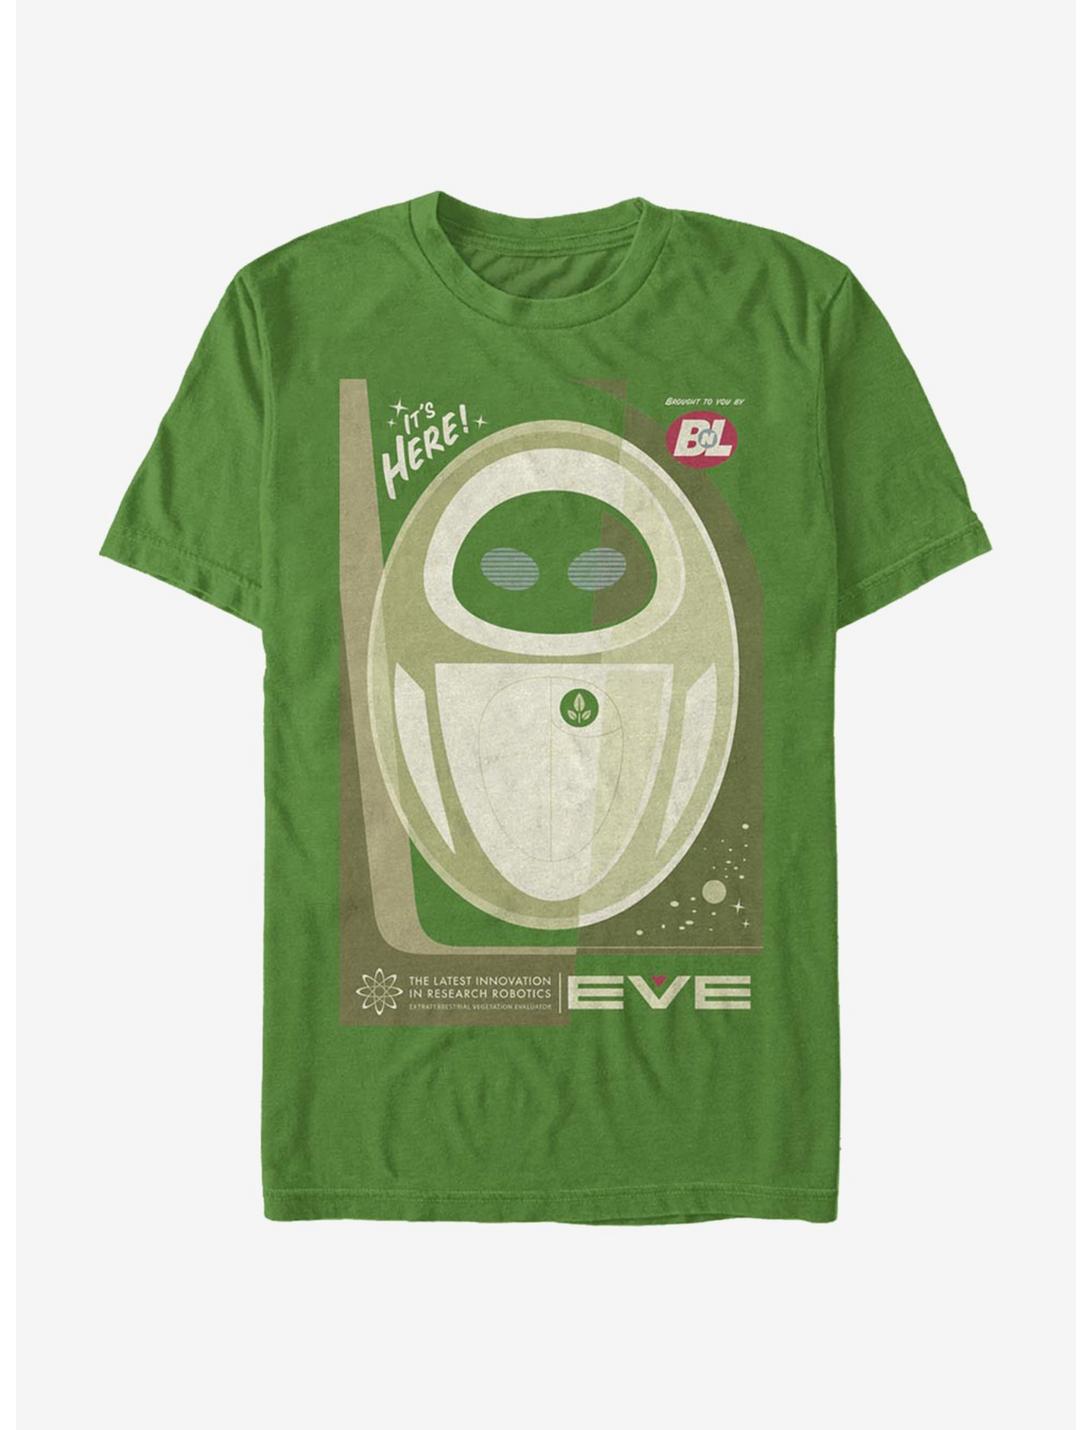 Disney Pixar Wall-E Eve Is Here Poster T-Shirt, KELLY, hi-res